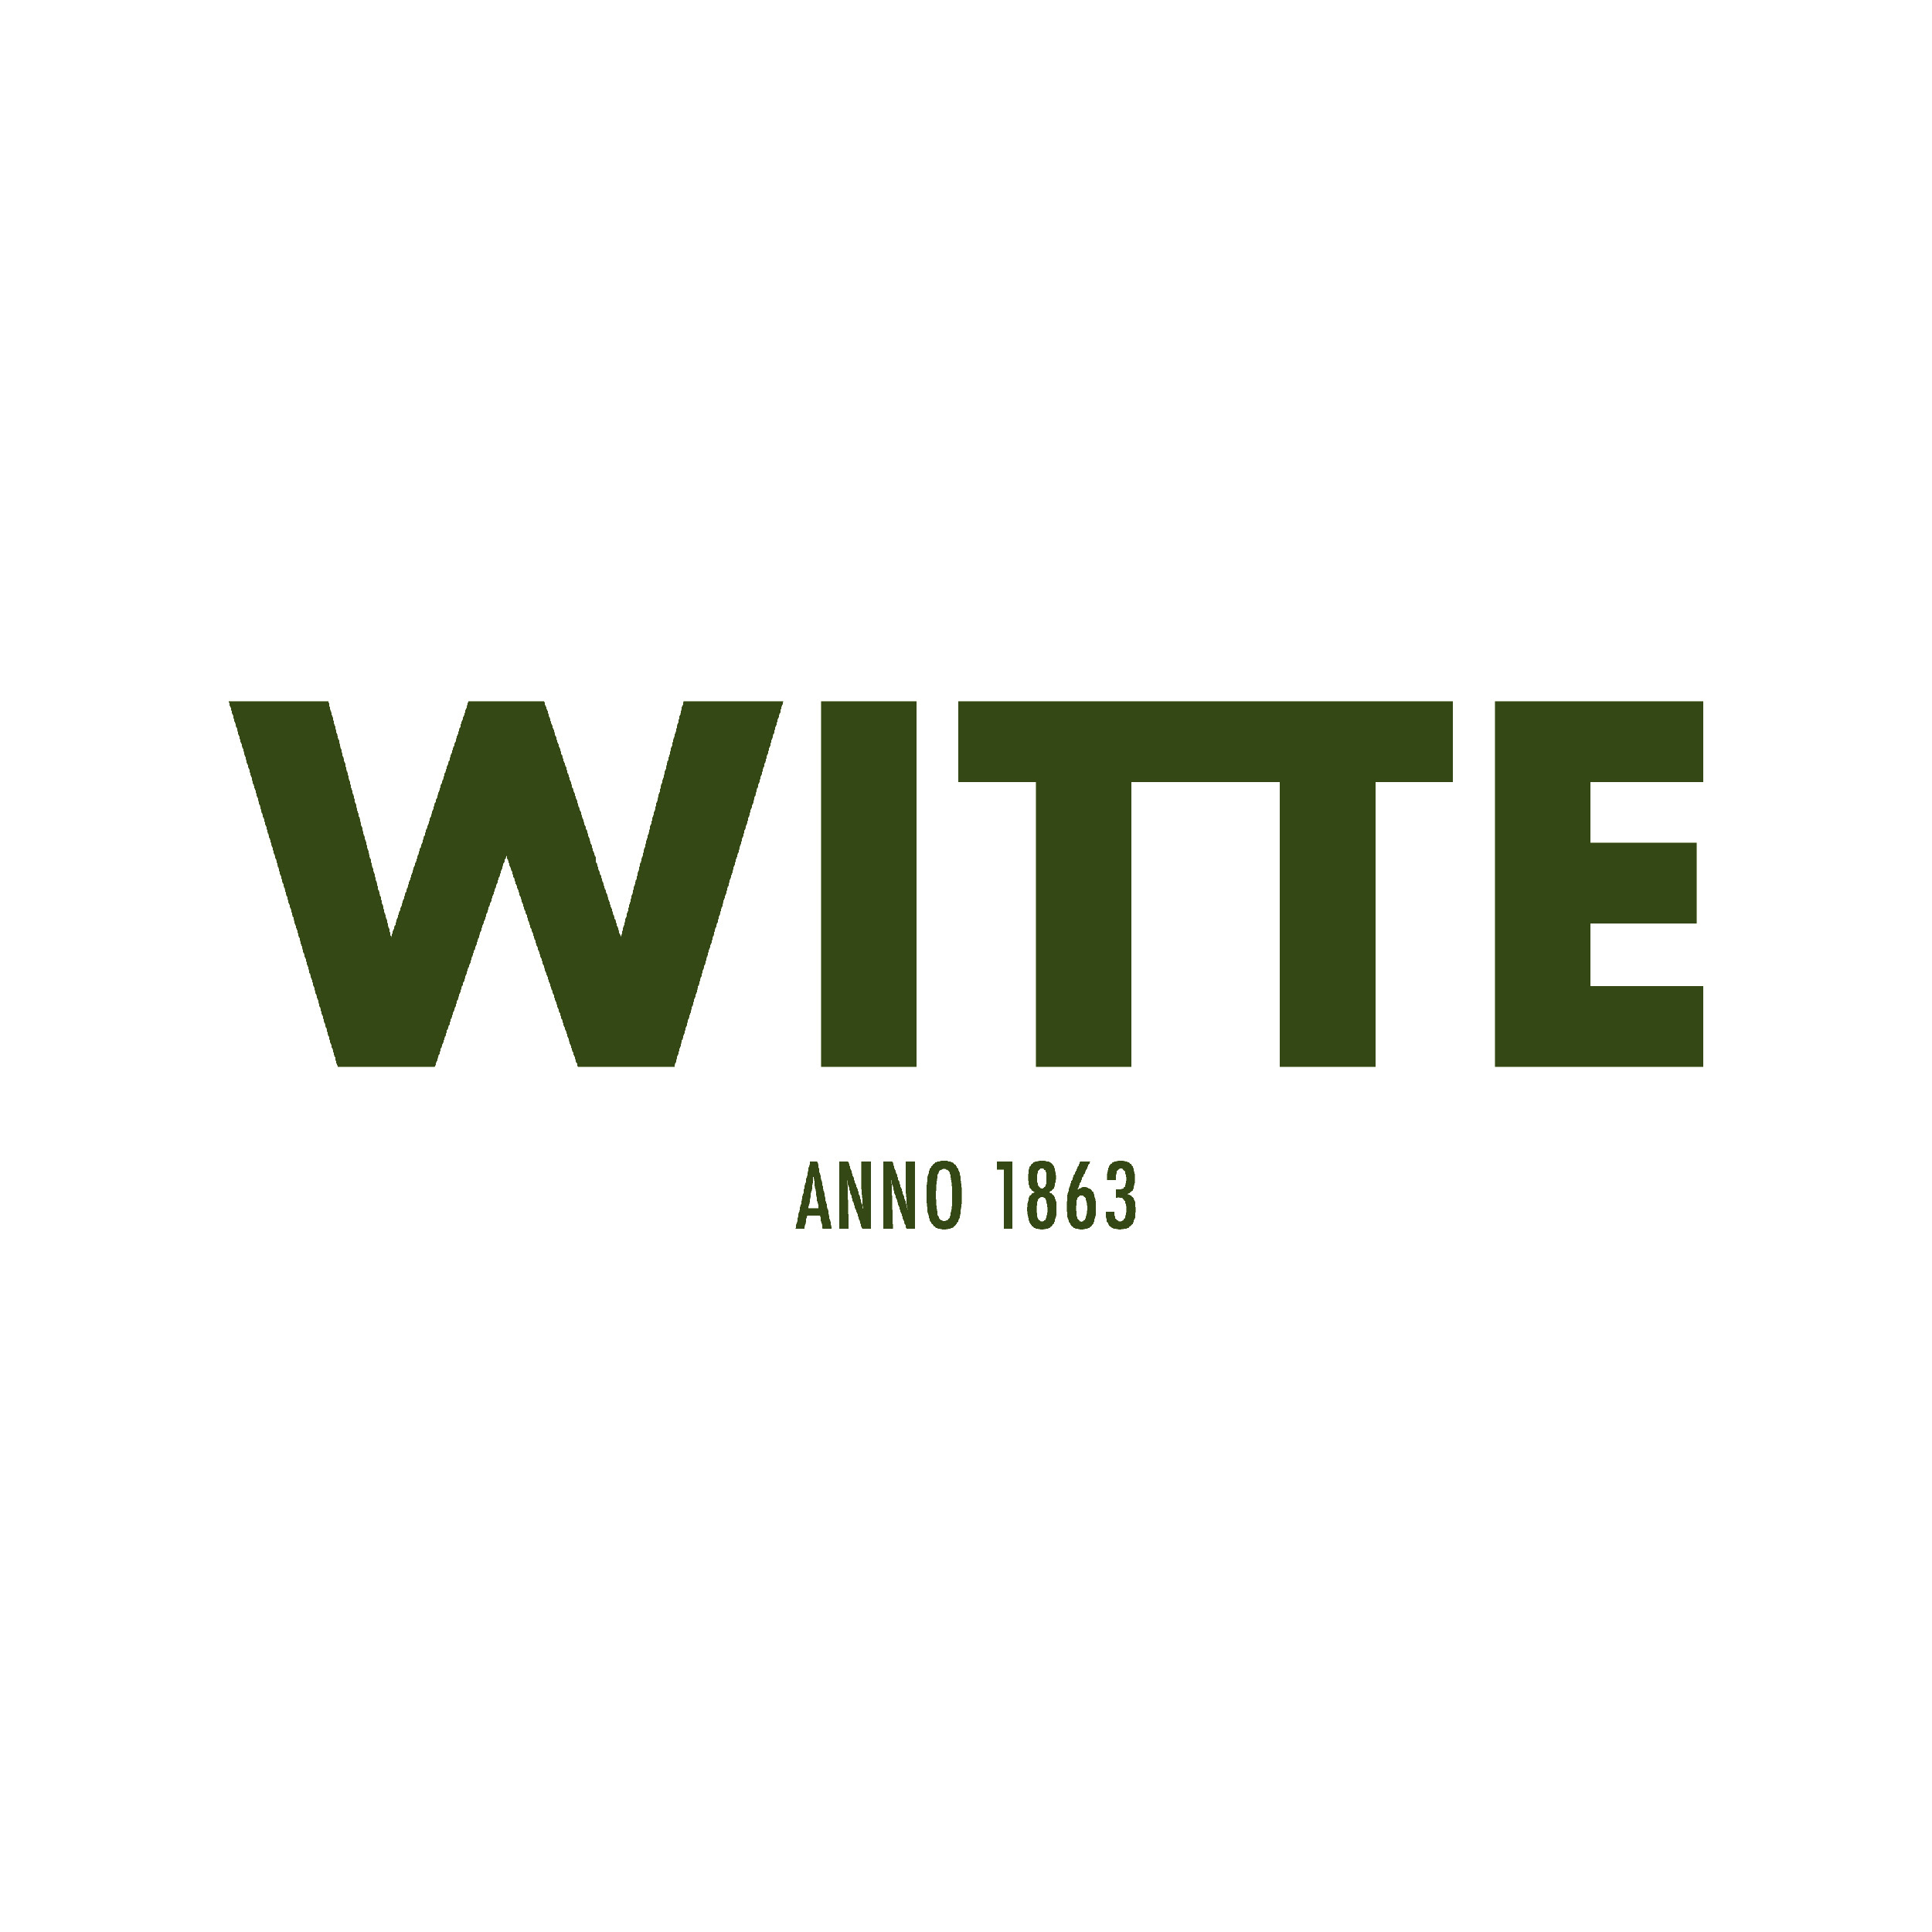 WITTE - Festival - Wien - 01 5864305 Austria | ShowMeLocal.com